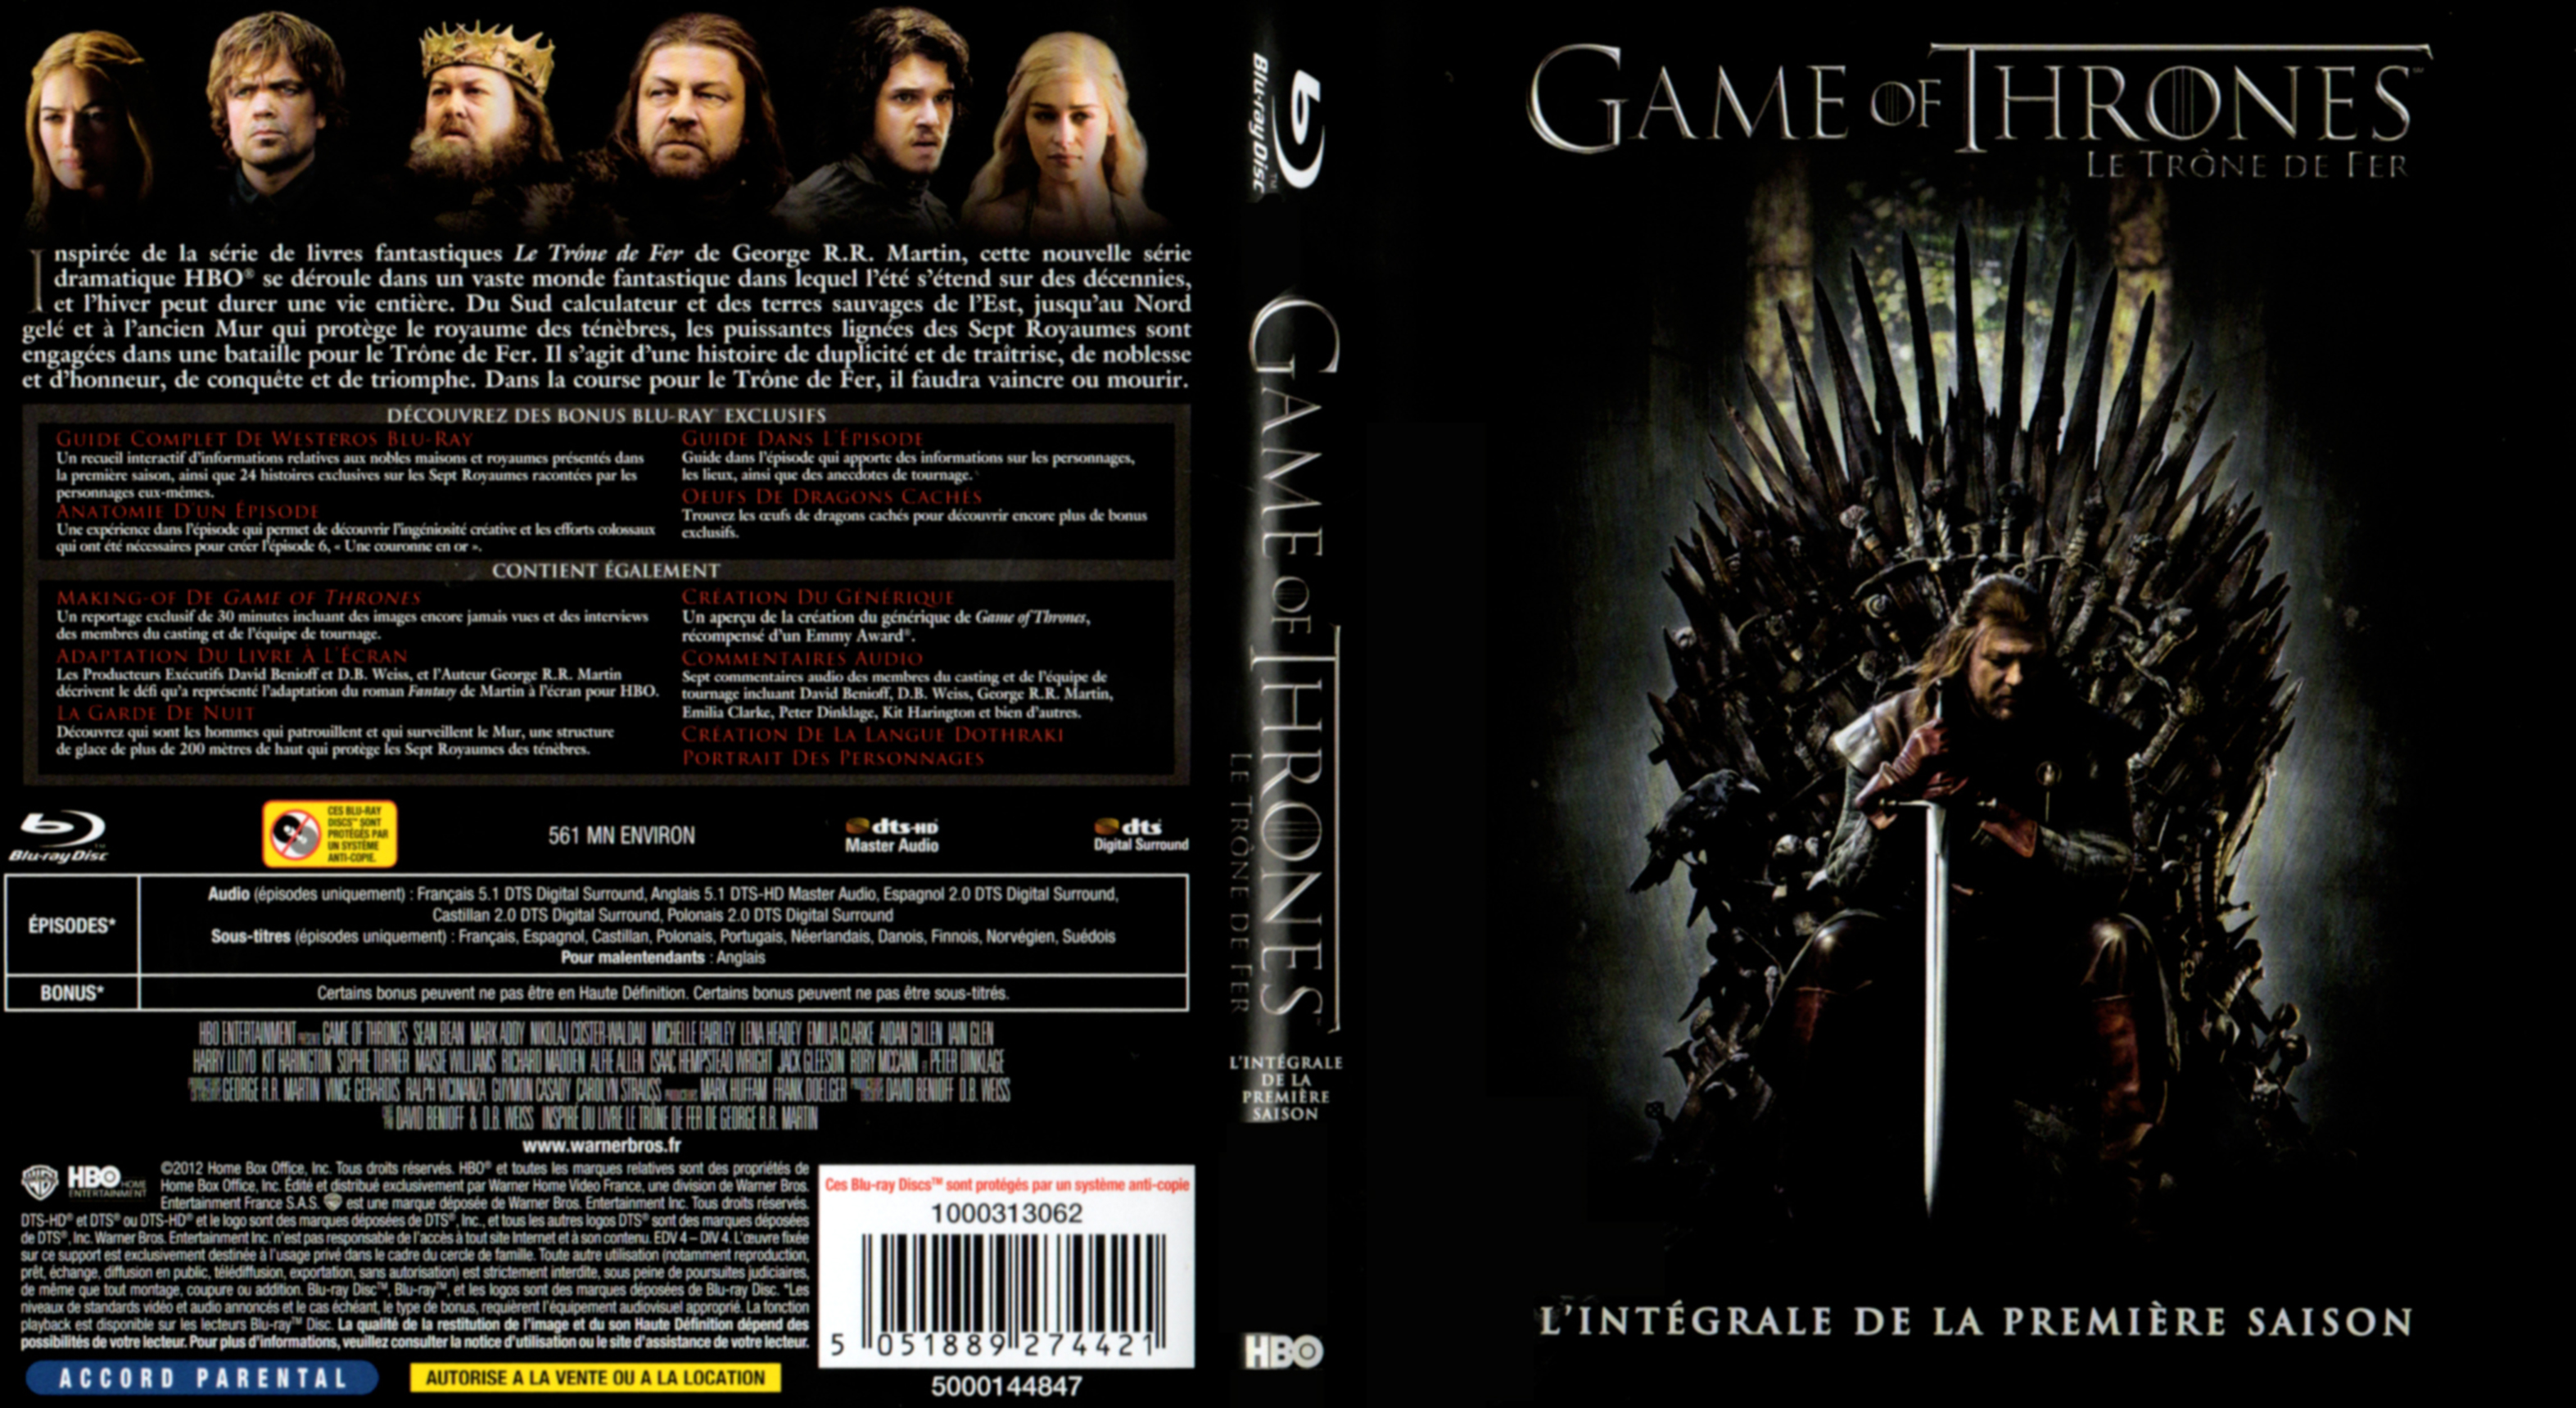 Jaquette DVD Game of thrones (le trone de fer) Saison 1 (BLU-RAY)